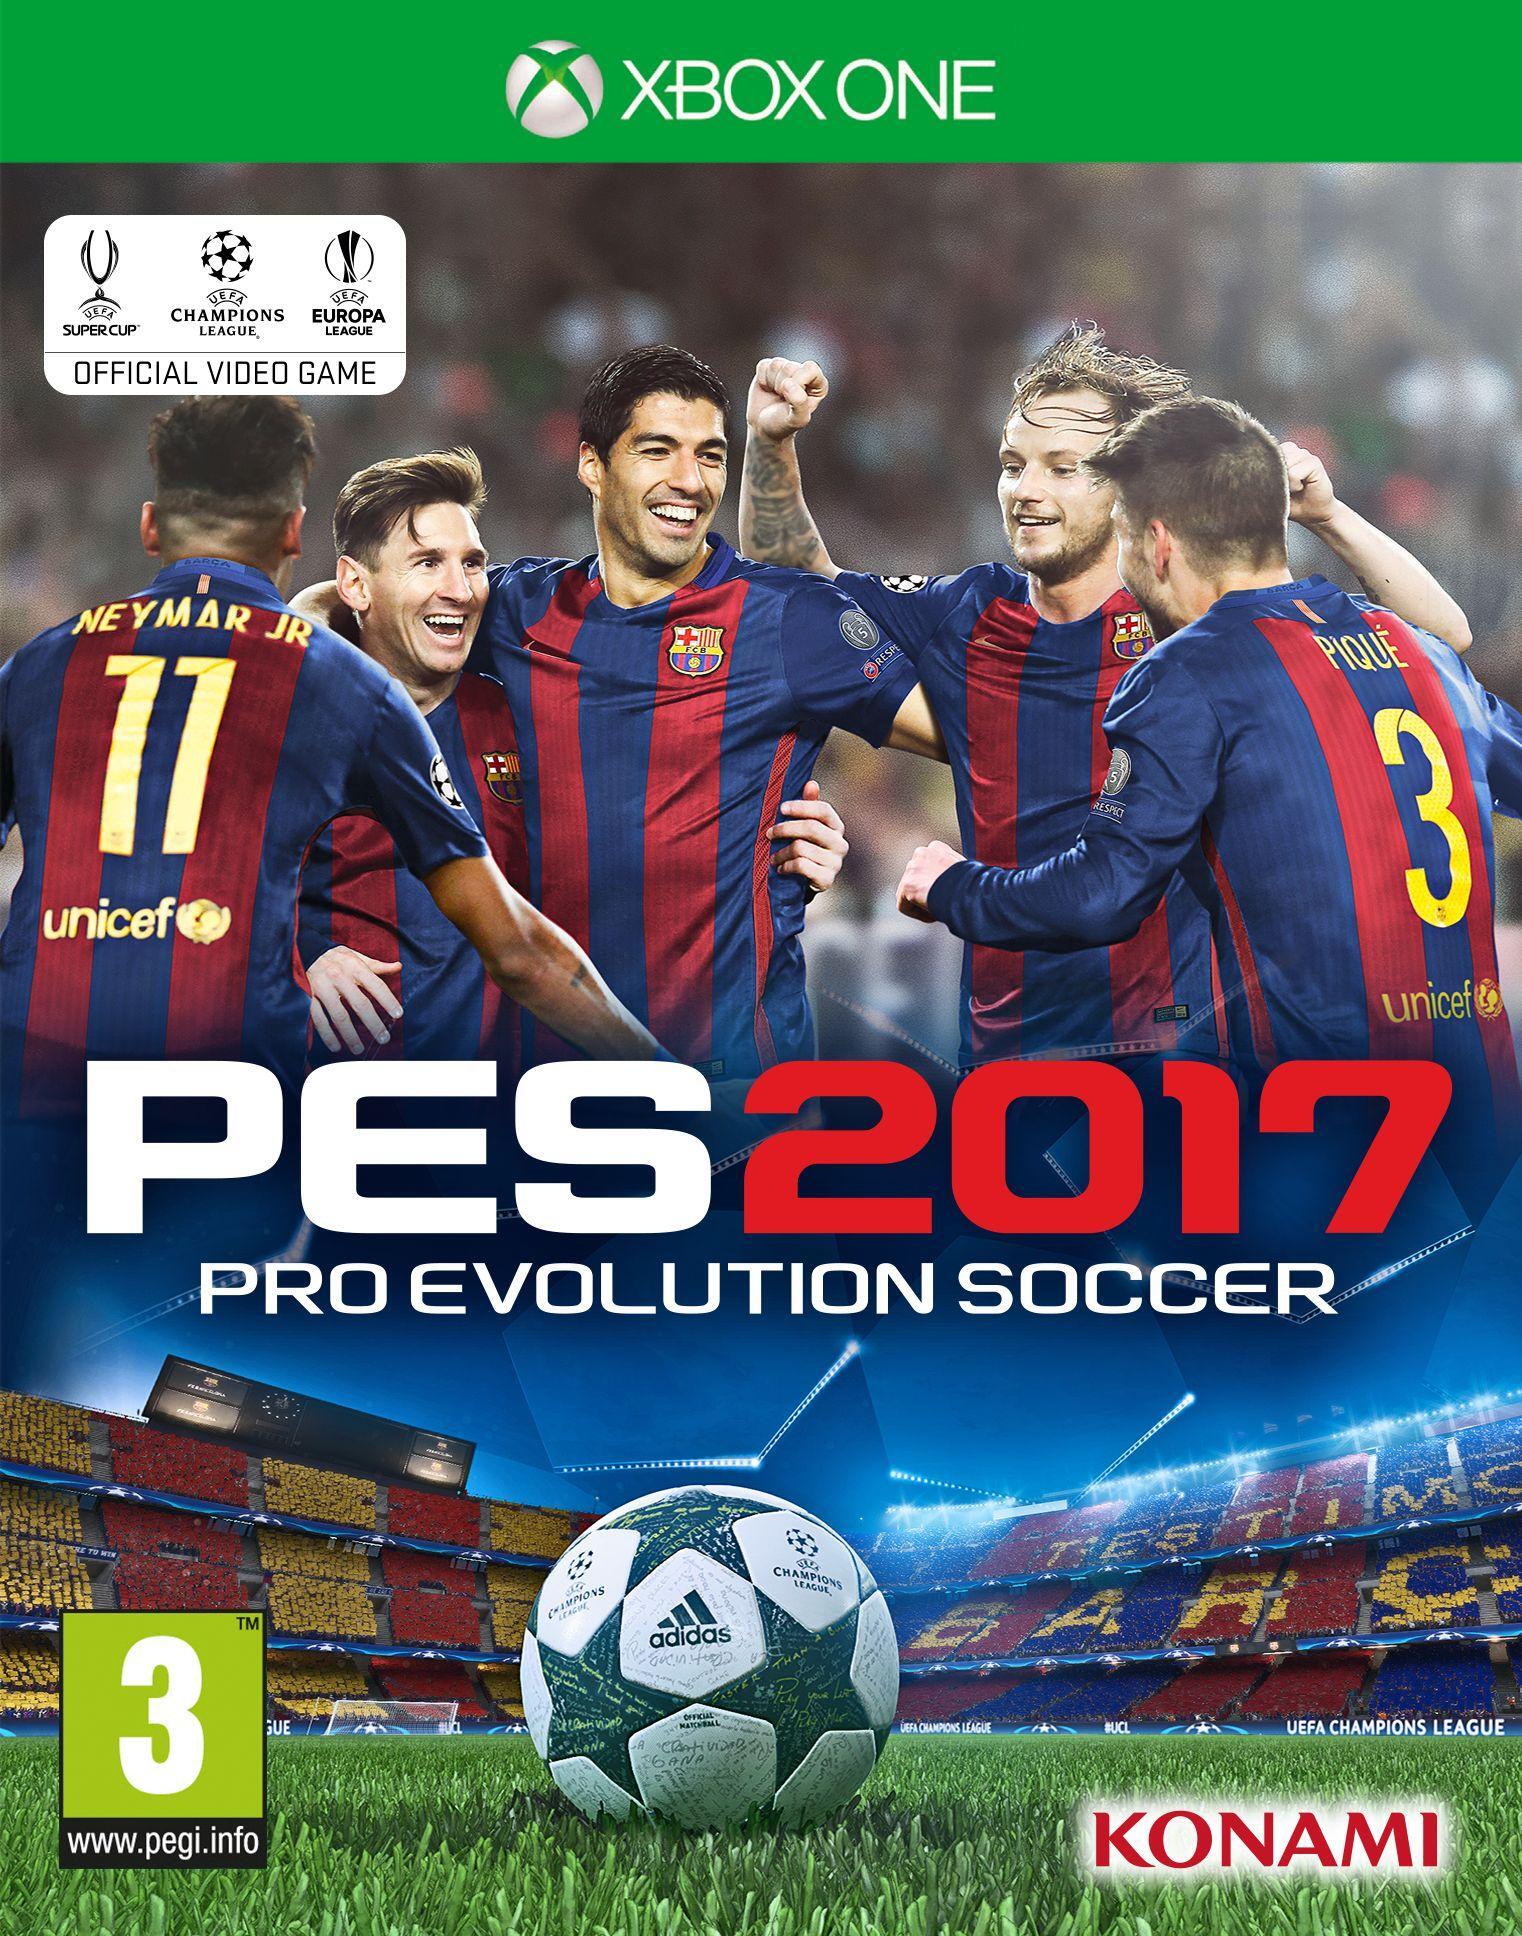 Konami Pro Evolution Soccer 2017 (PES 2017) - Xbox One